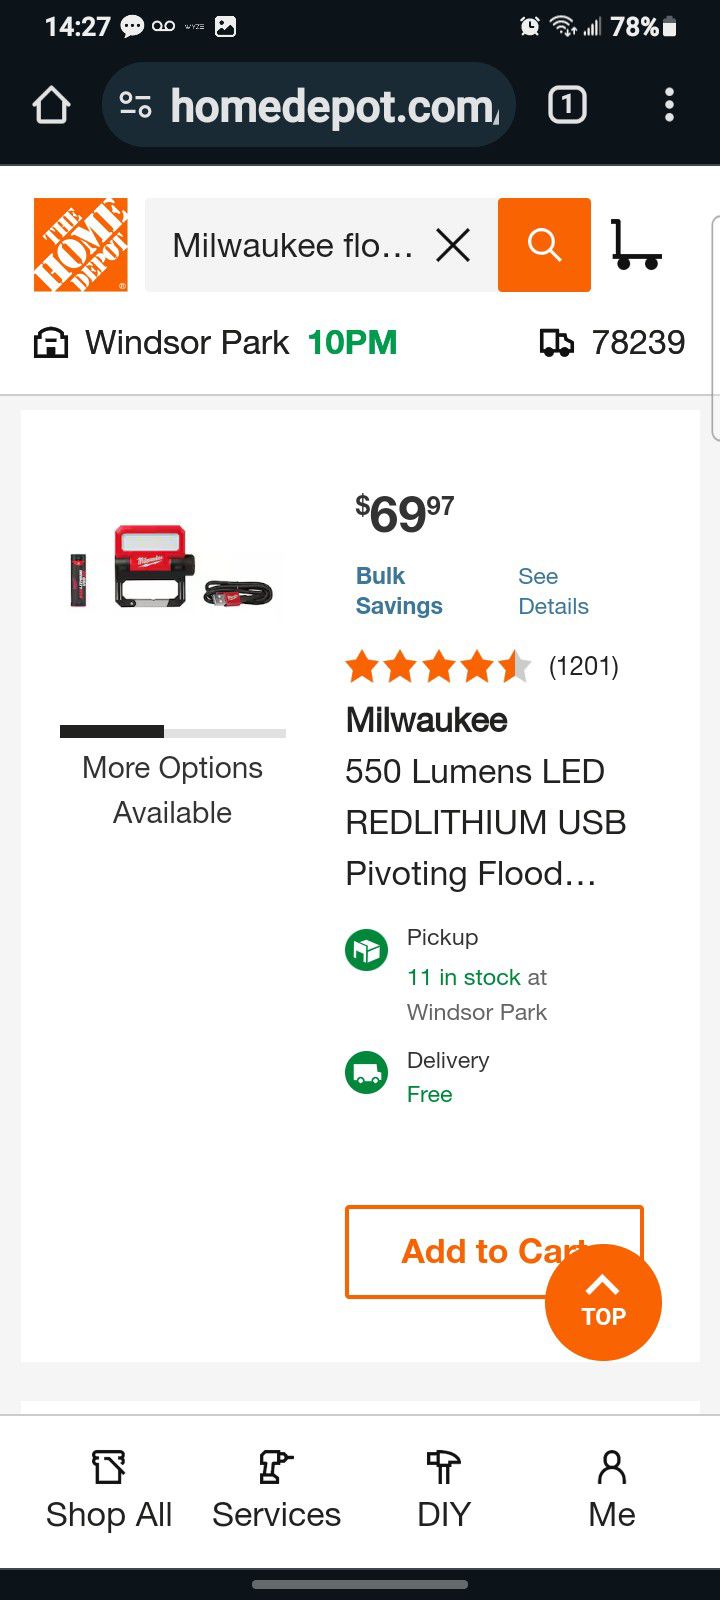 Milwaukee
550 Lumens LED REDLITHIUM USB Pivoting Flood Light